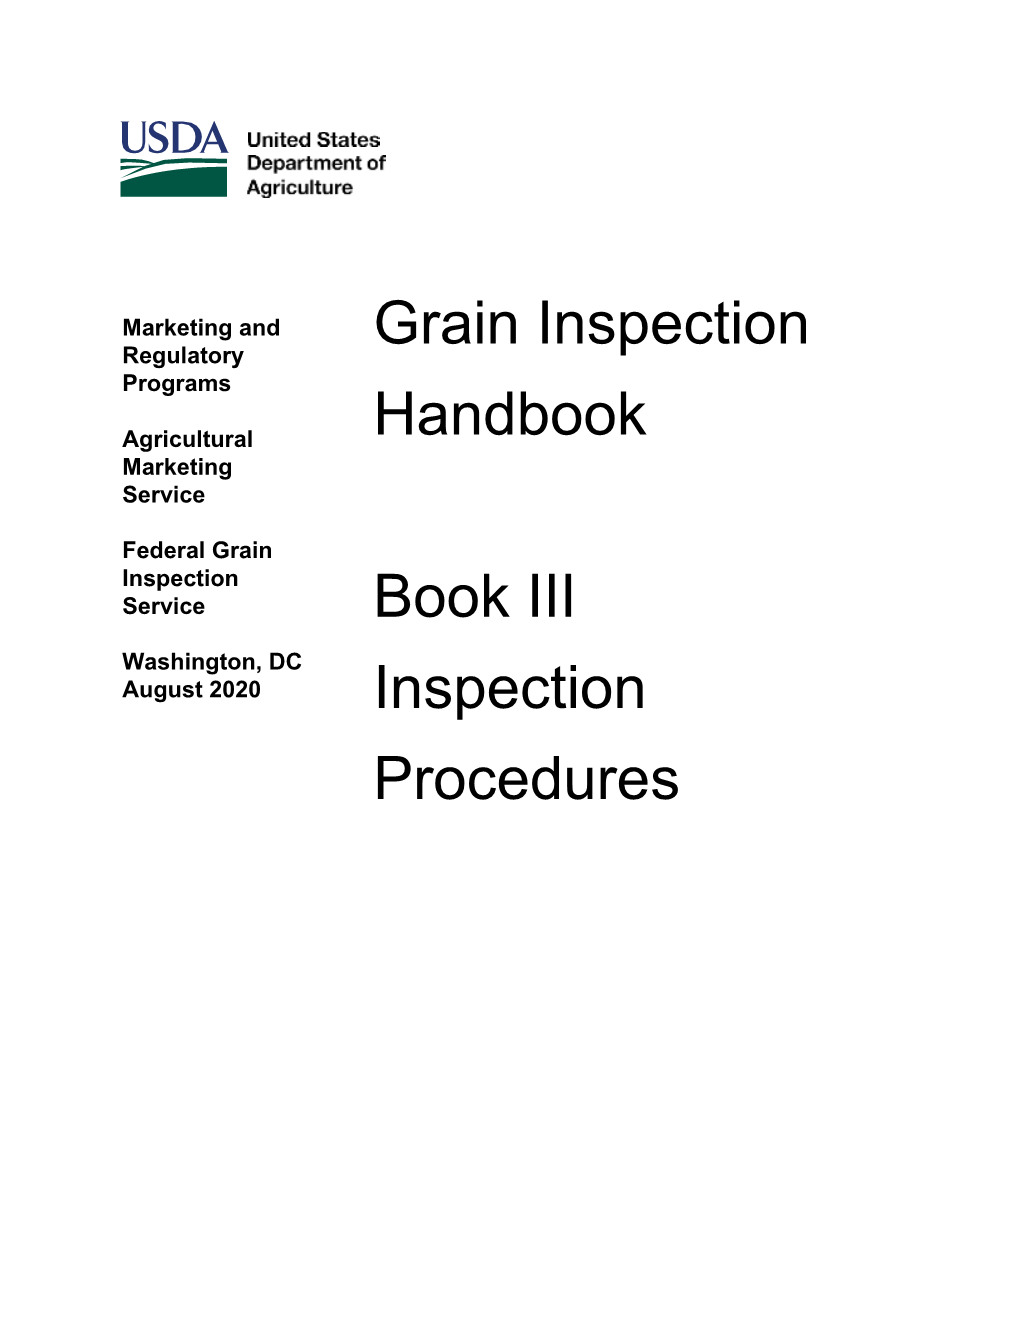 FGIS Grain Inspection Handbook, Book